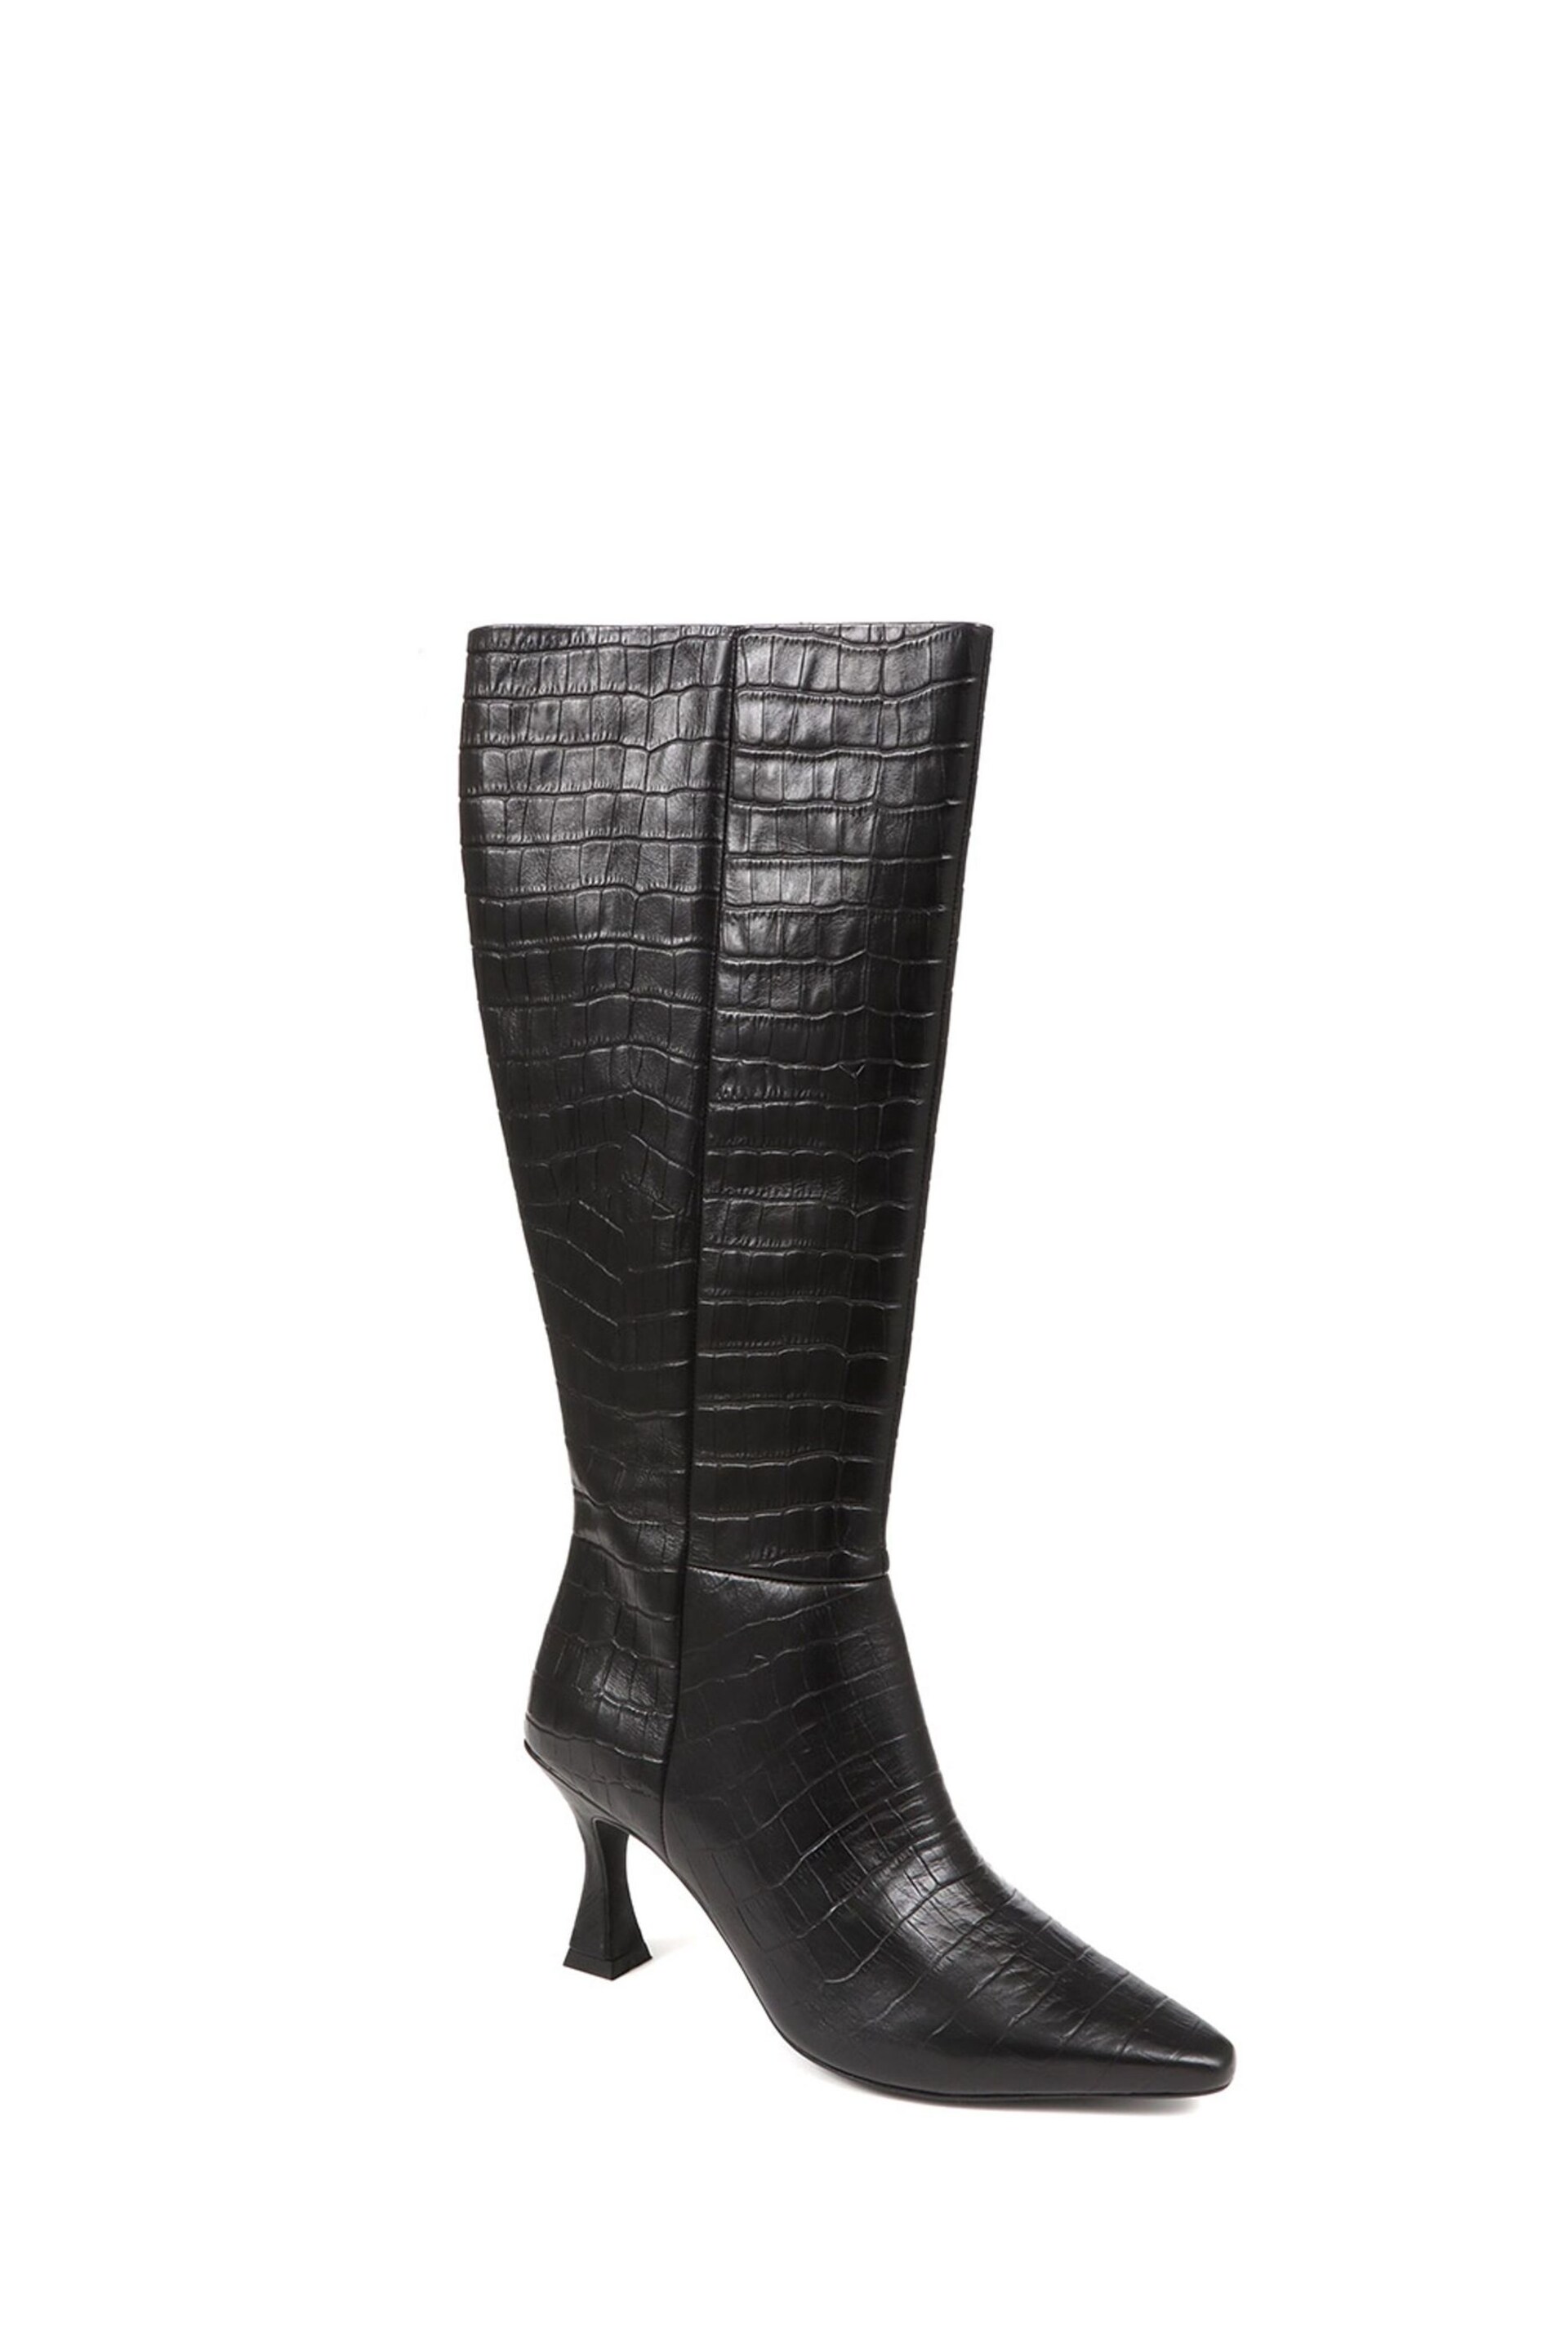 Jones Bootmaker Knee-High Leather Heeled Black Boots - Image 2 of 5